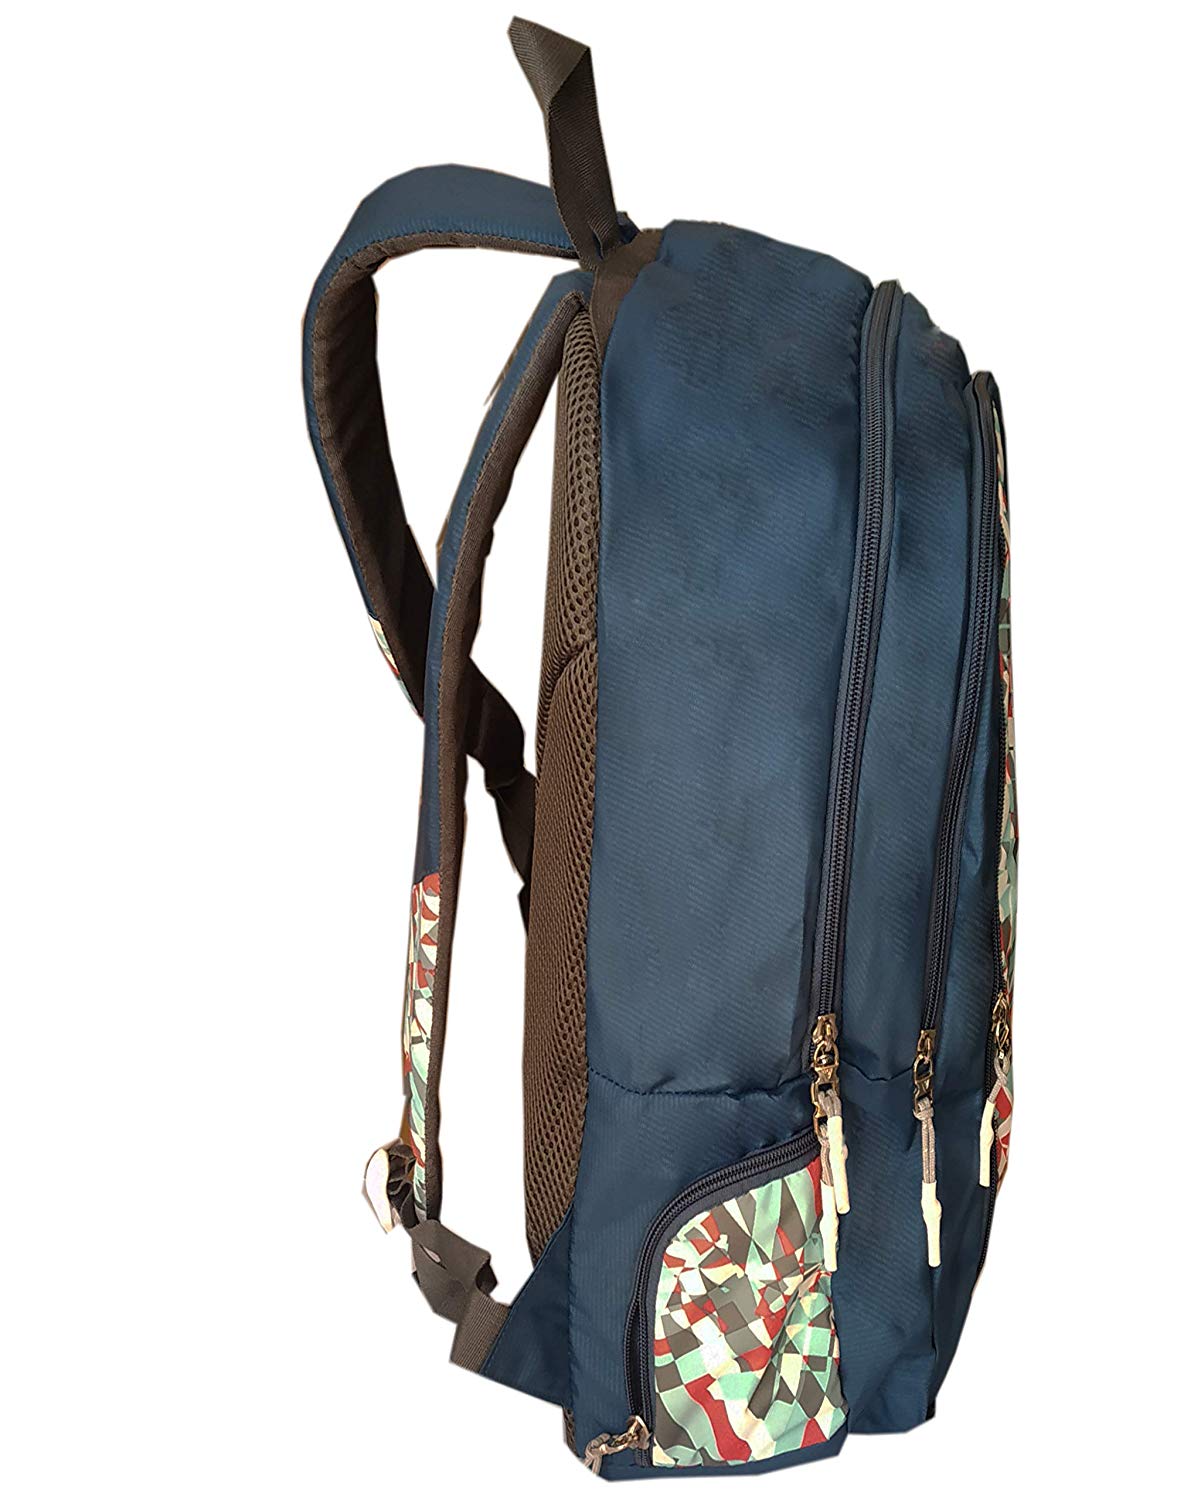 Prokick 30 Ltrs Lite Weight Waterproof Casual Backpack | School Bag, Blue - Best Price online Prokicksports.com